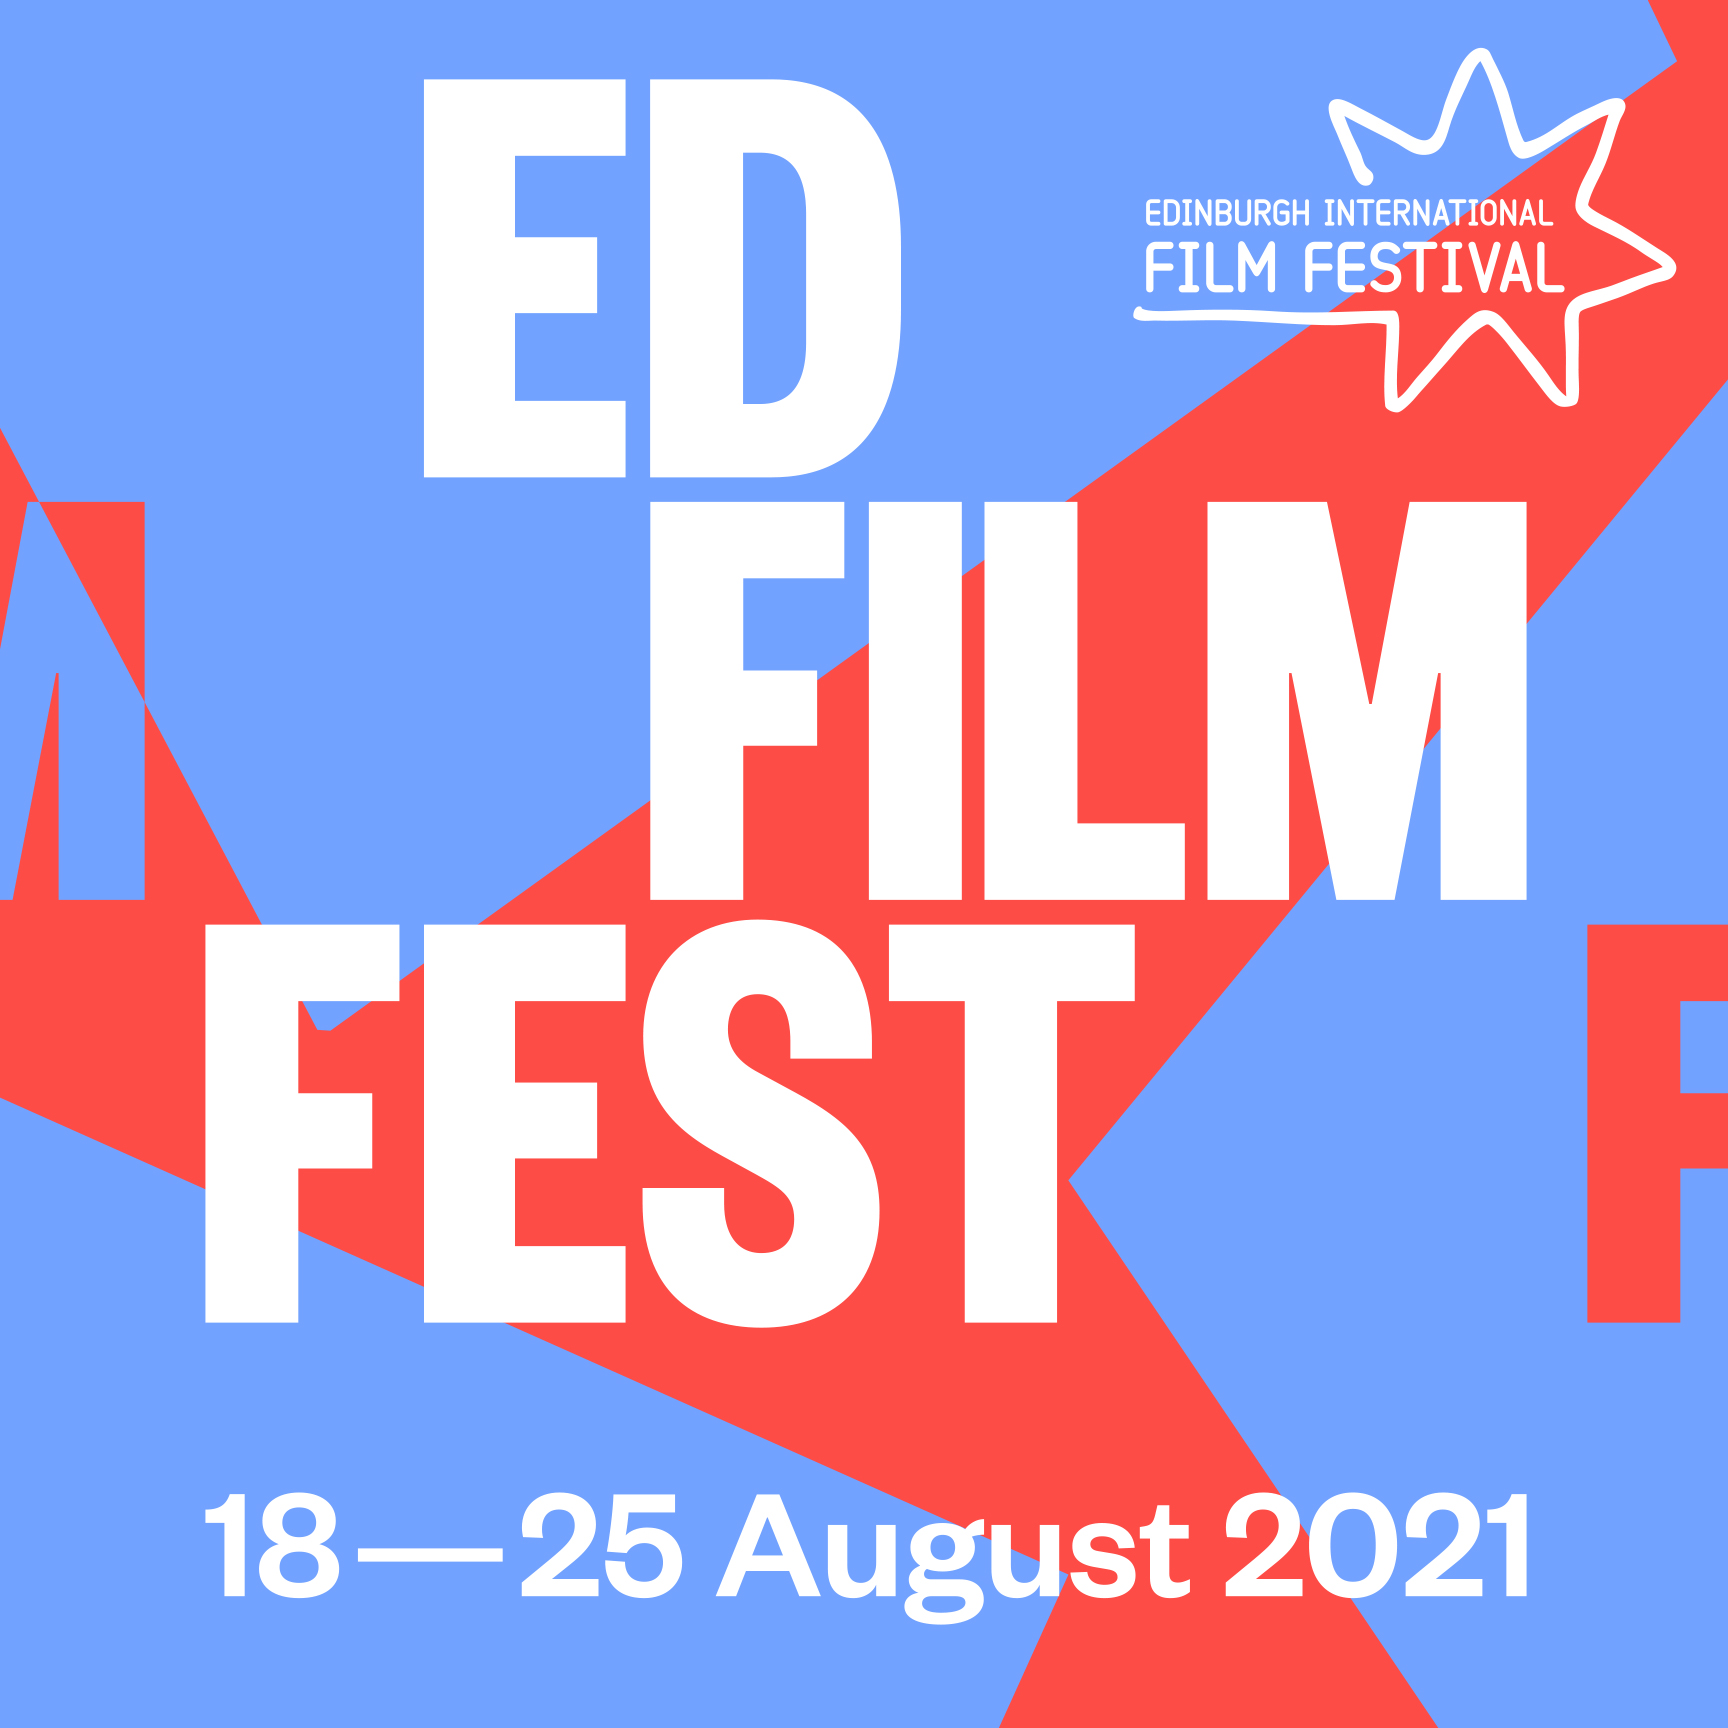 EIFF 2021 - Edinburgh International Film Festival Review